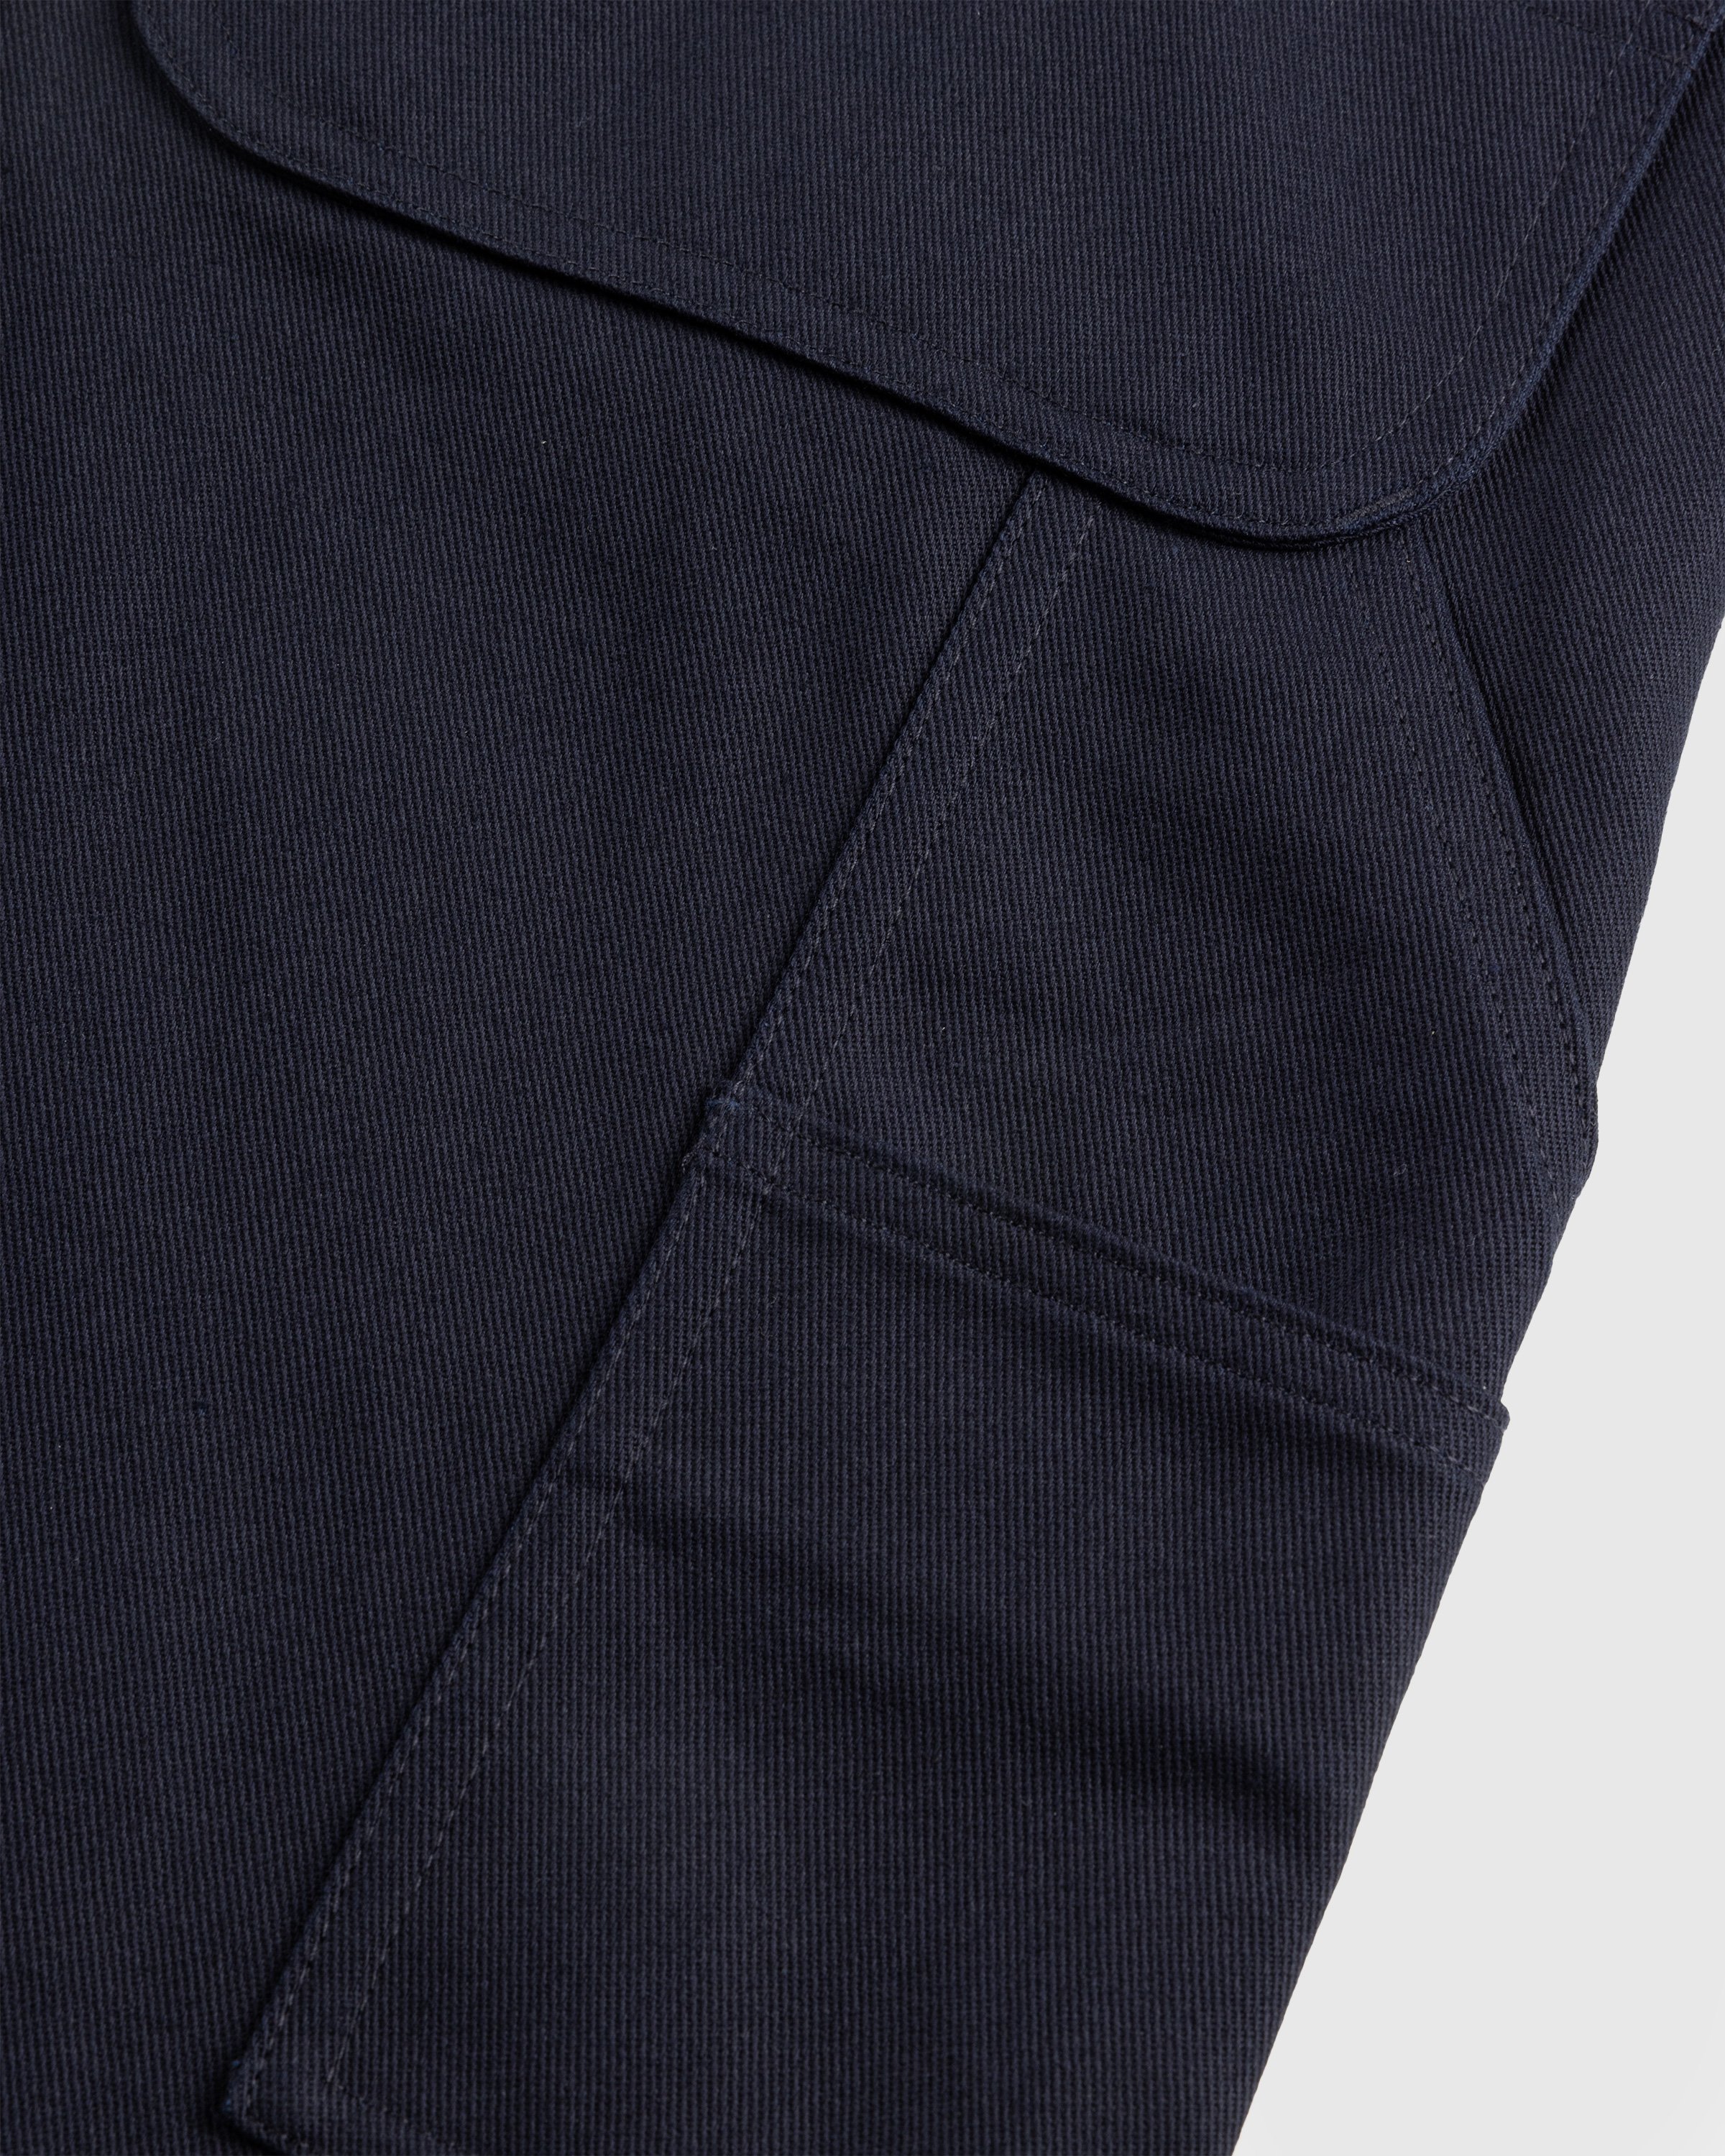 Carhartt WIP - Midland Pant Dark Navy - Clothing - Blue - Image 7